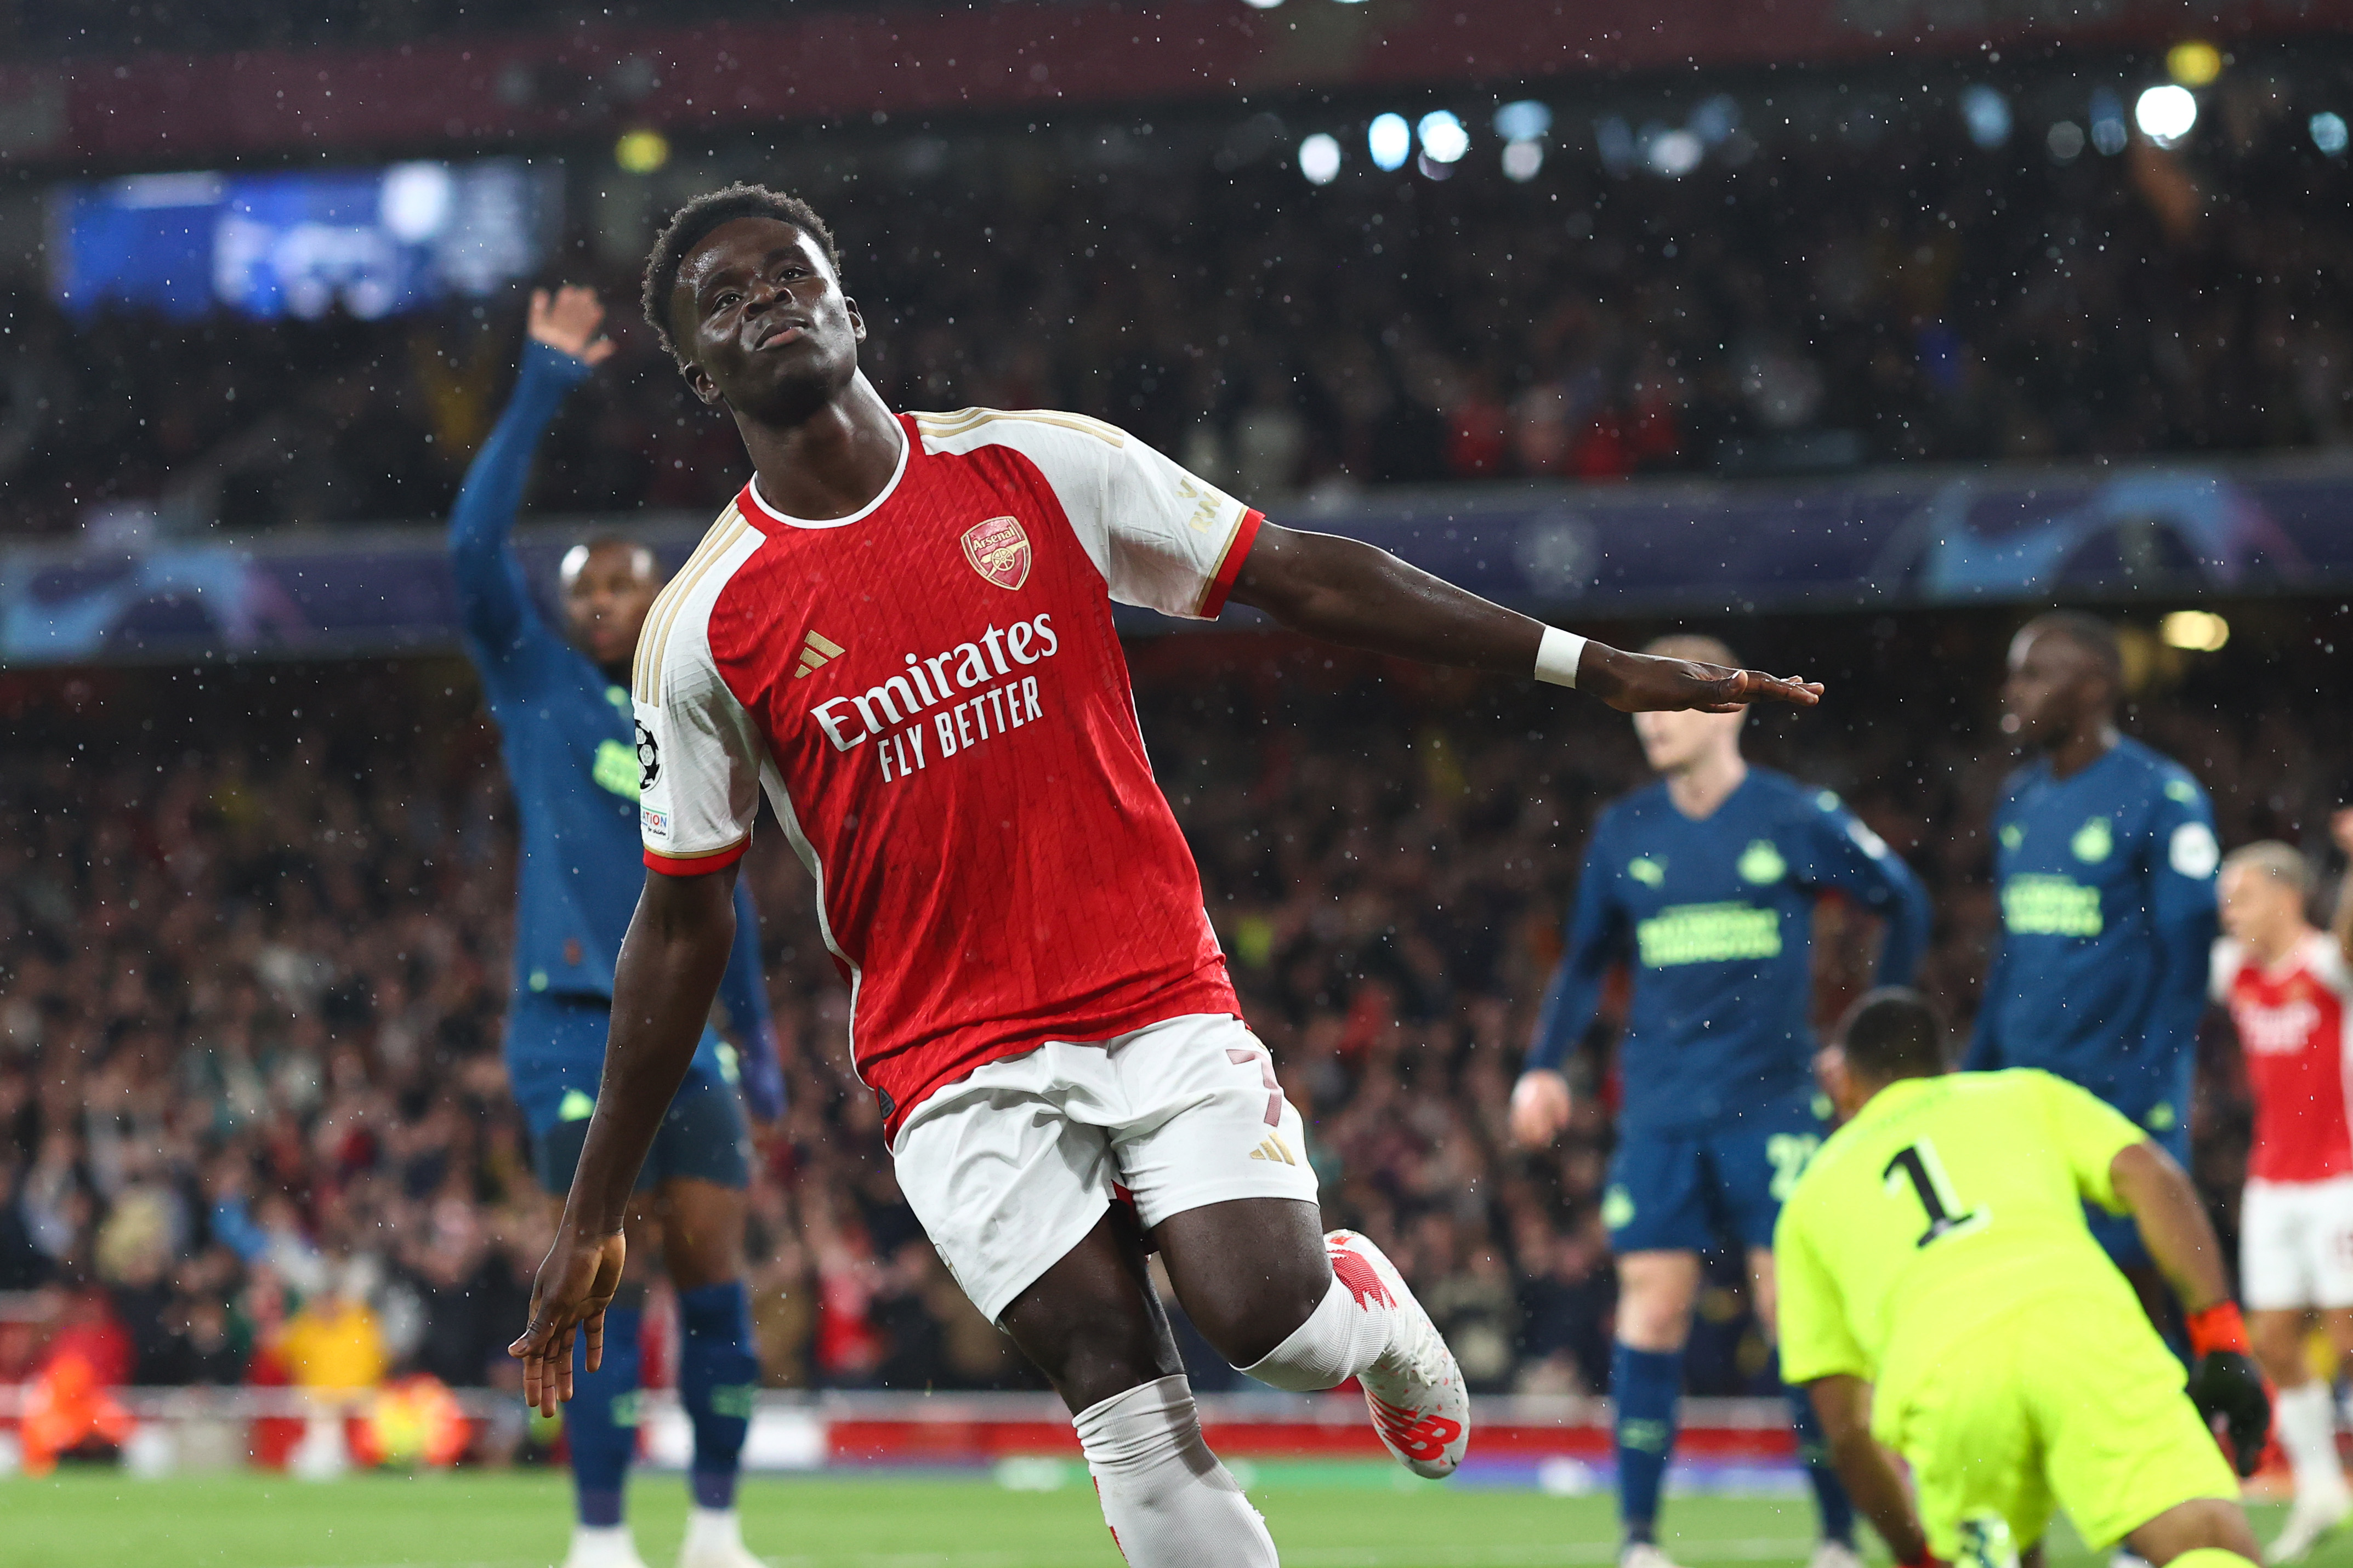 Bukayo Saka fit for West Ham clash says Arsenal boss Arteta 